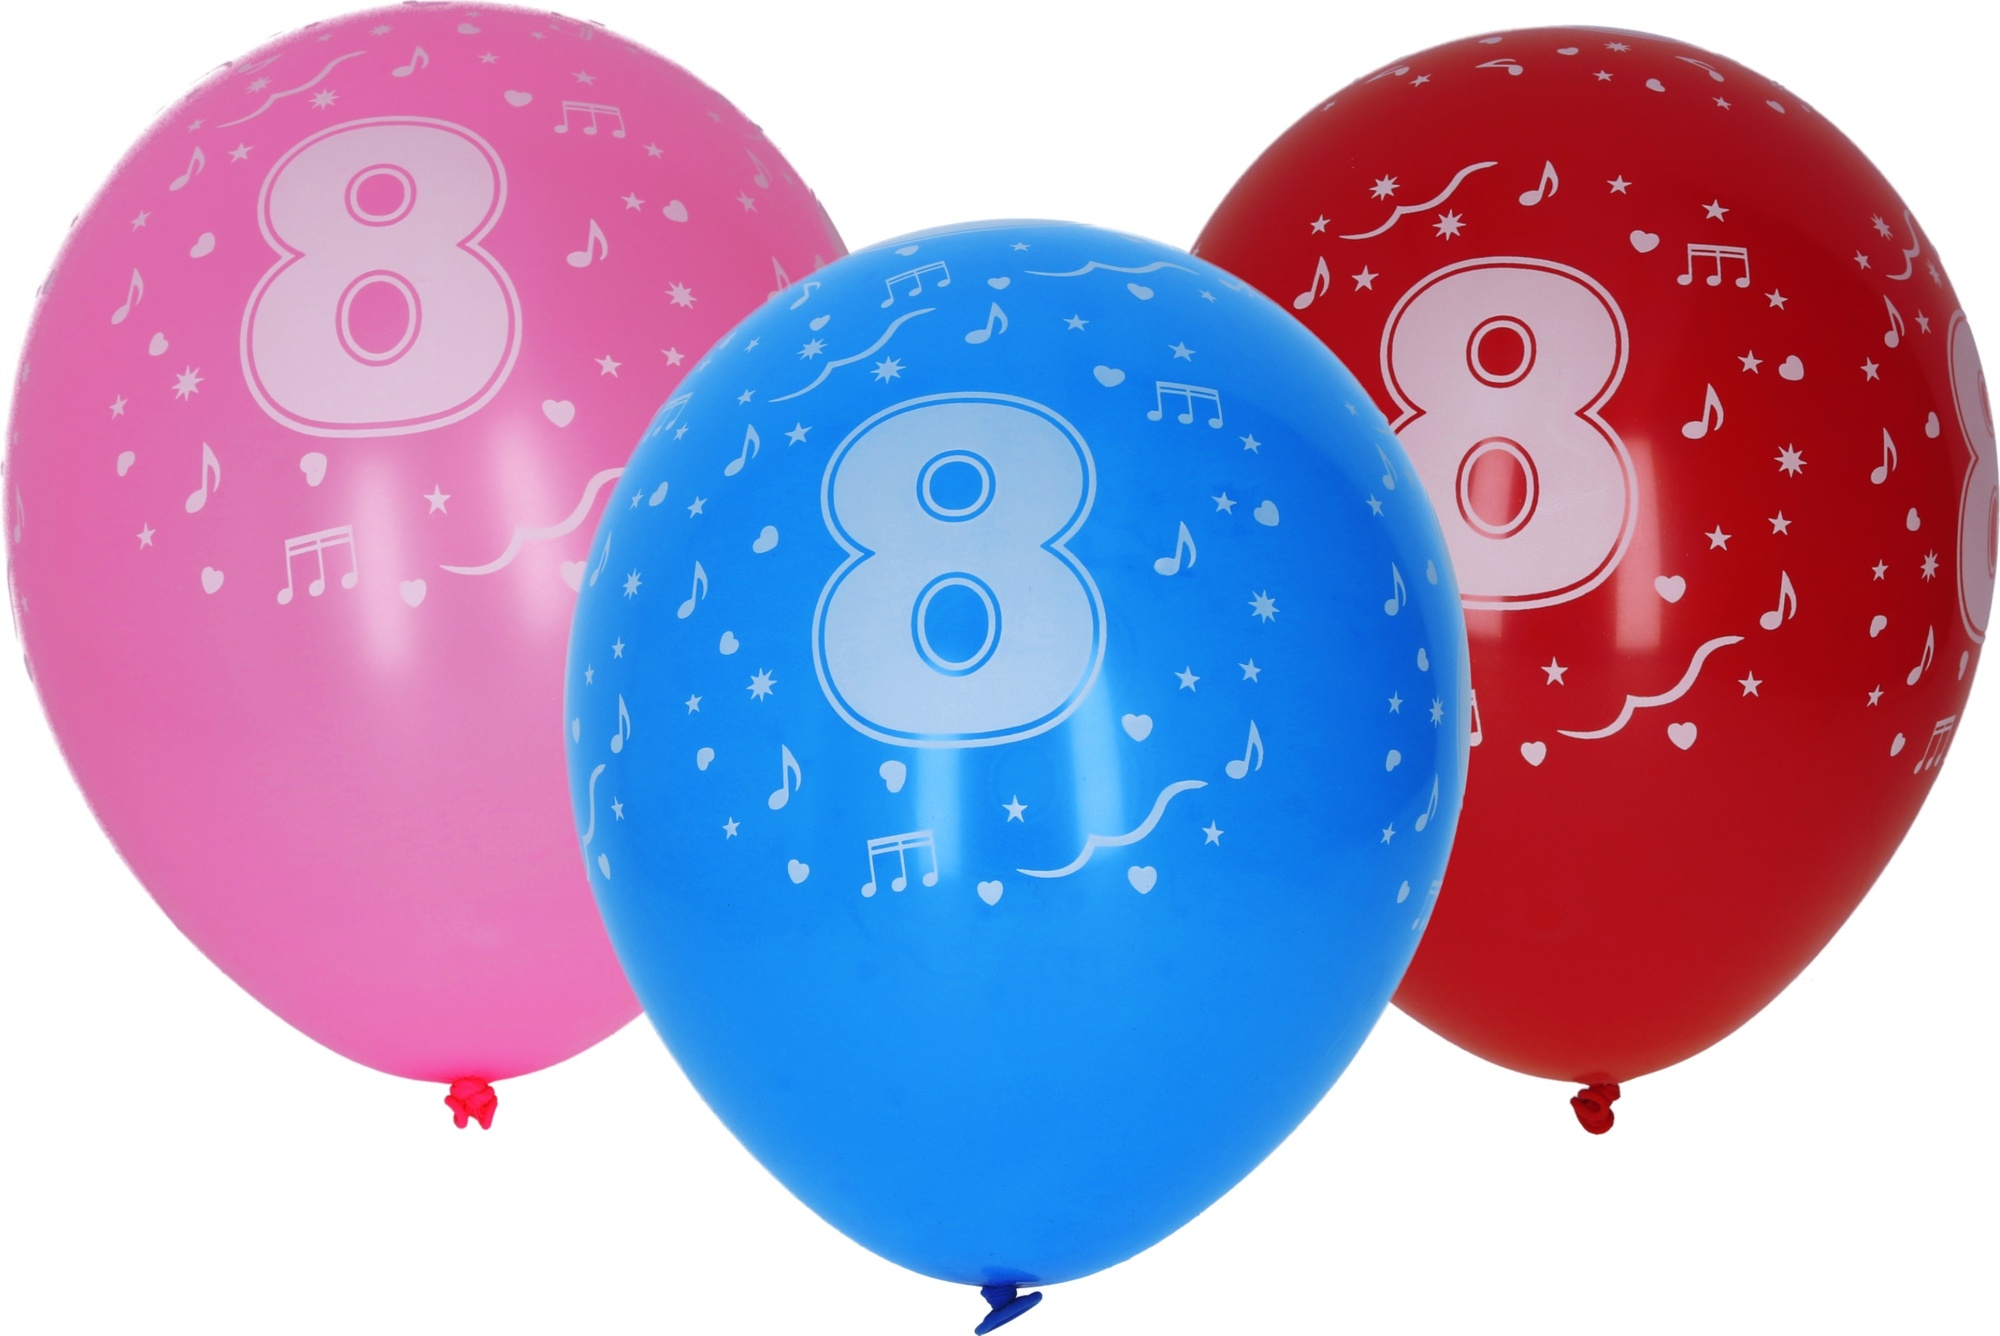 Balónek nafukovací 30cm - sada 5ks, s číslem 8